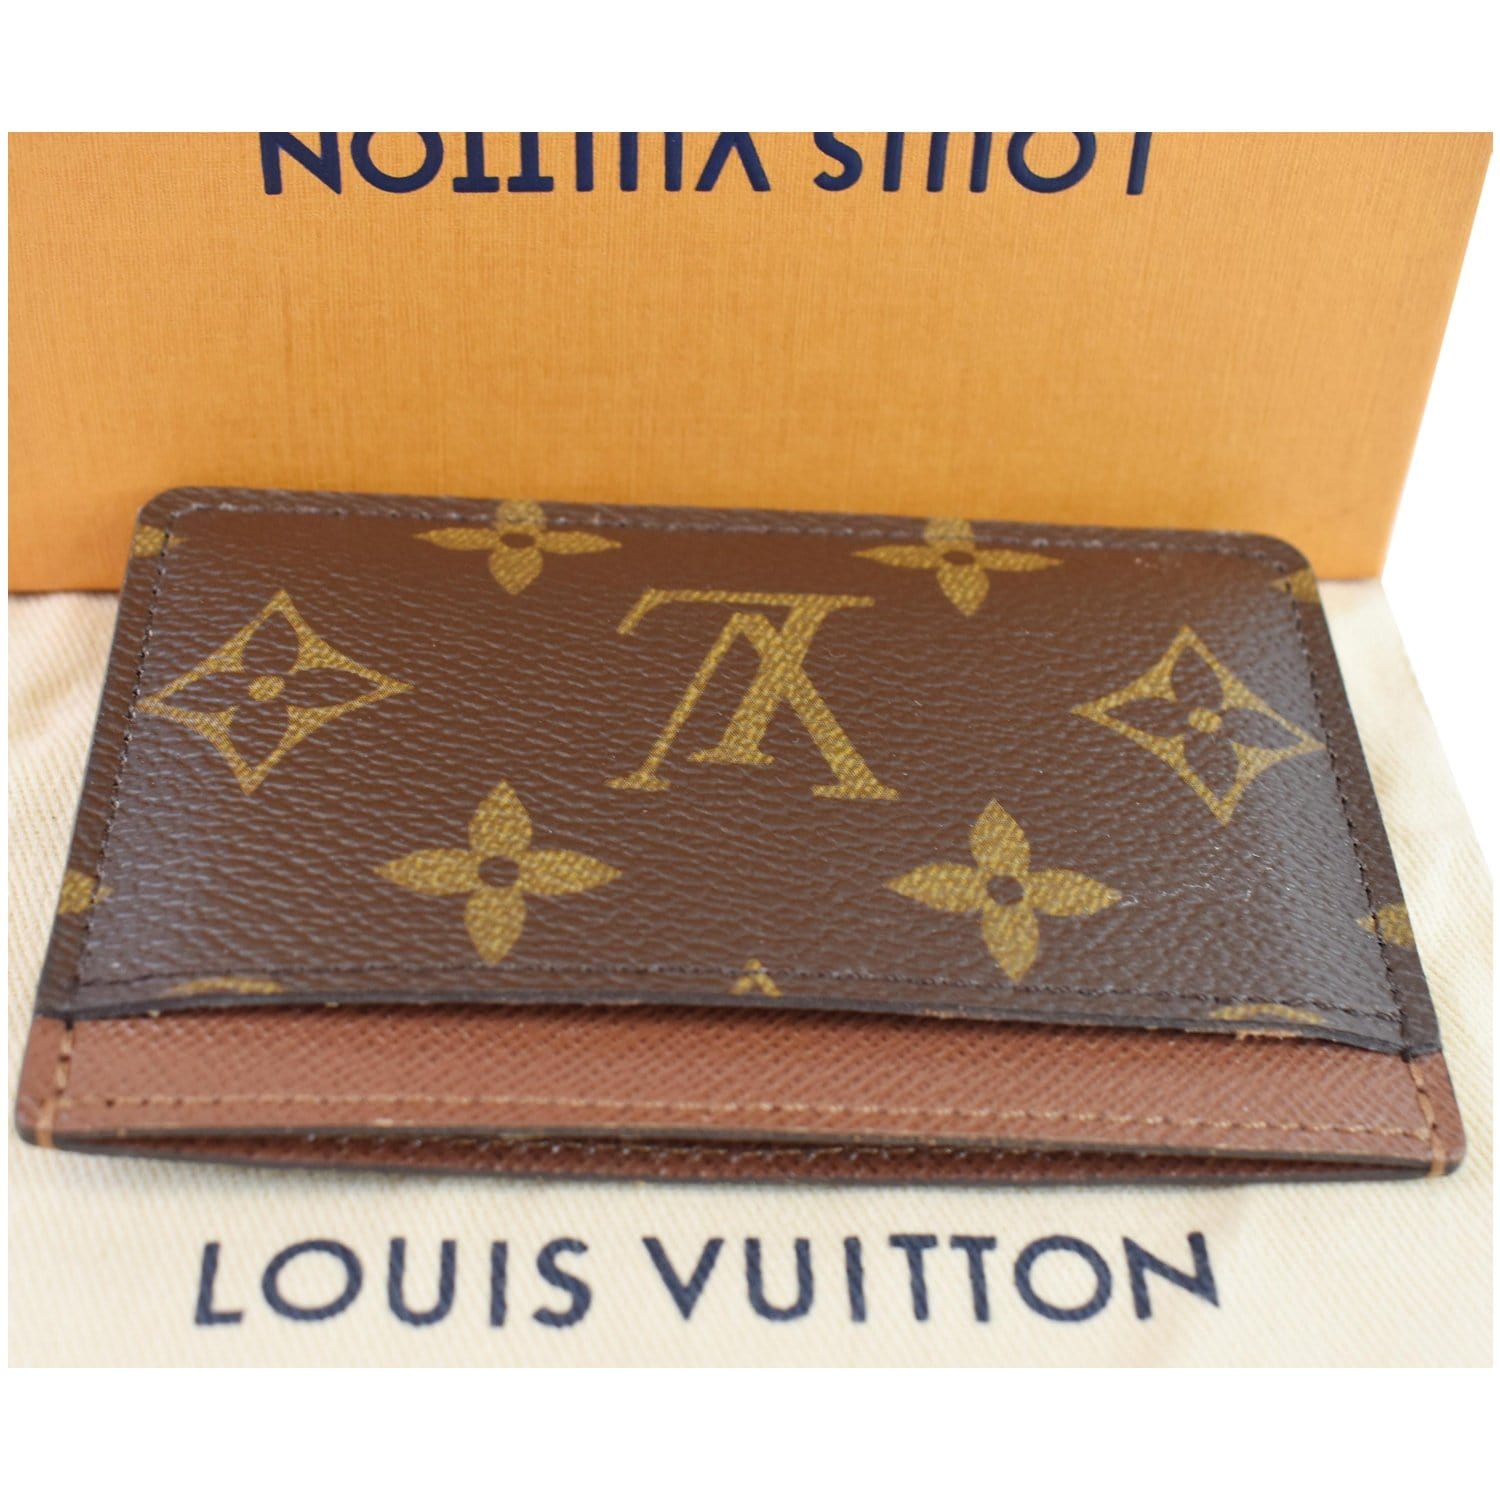 Louis Vuitton Women's Pre-Loved Card Holder, Monogram, Brown, One Size